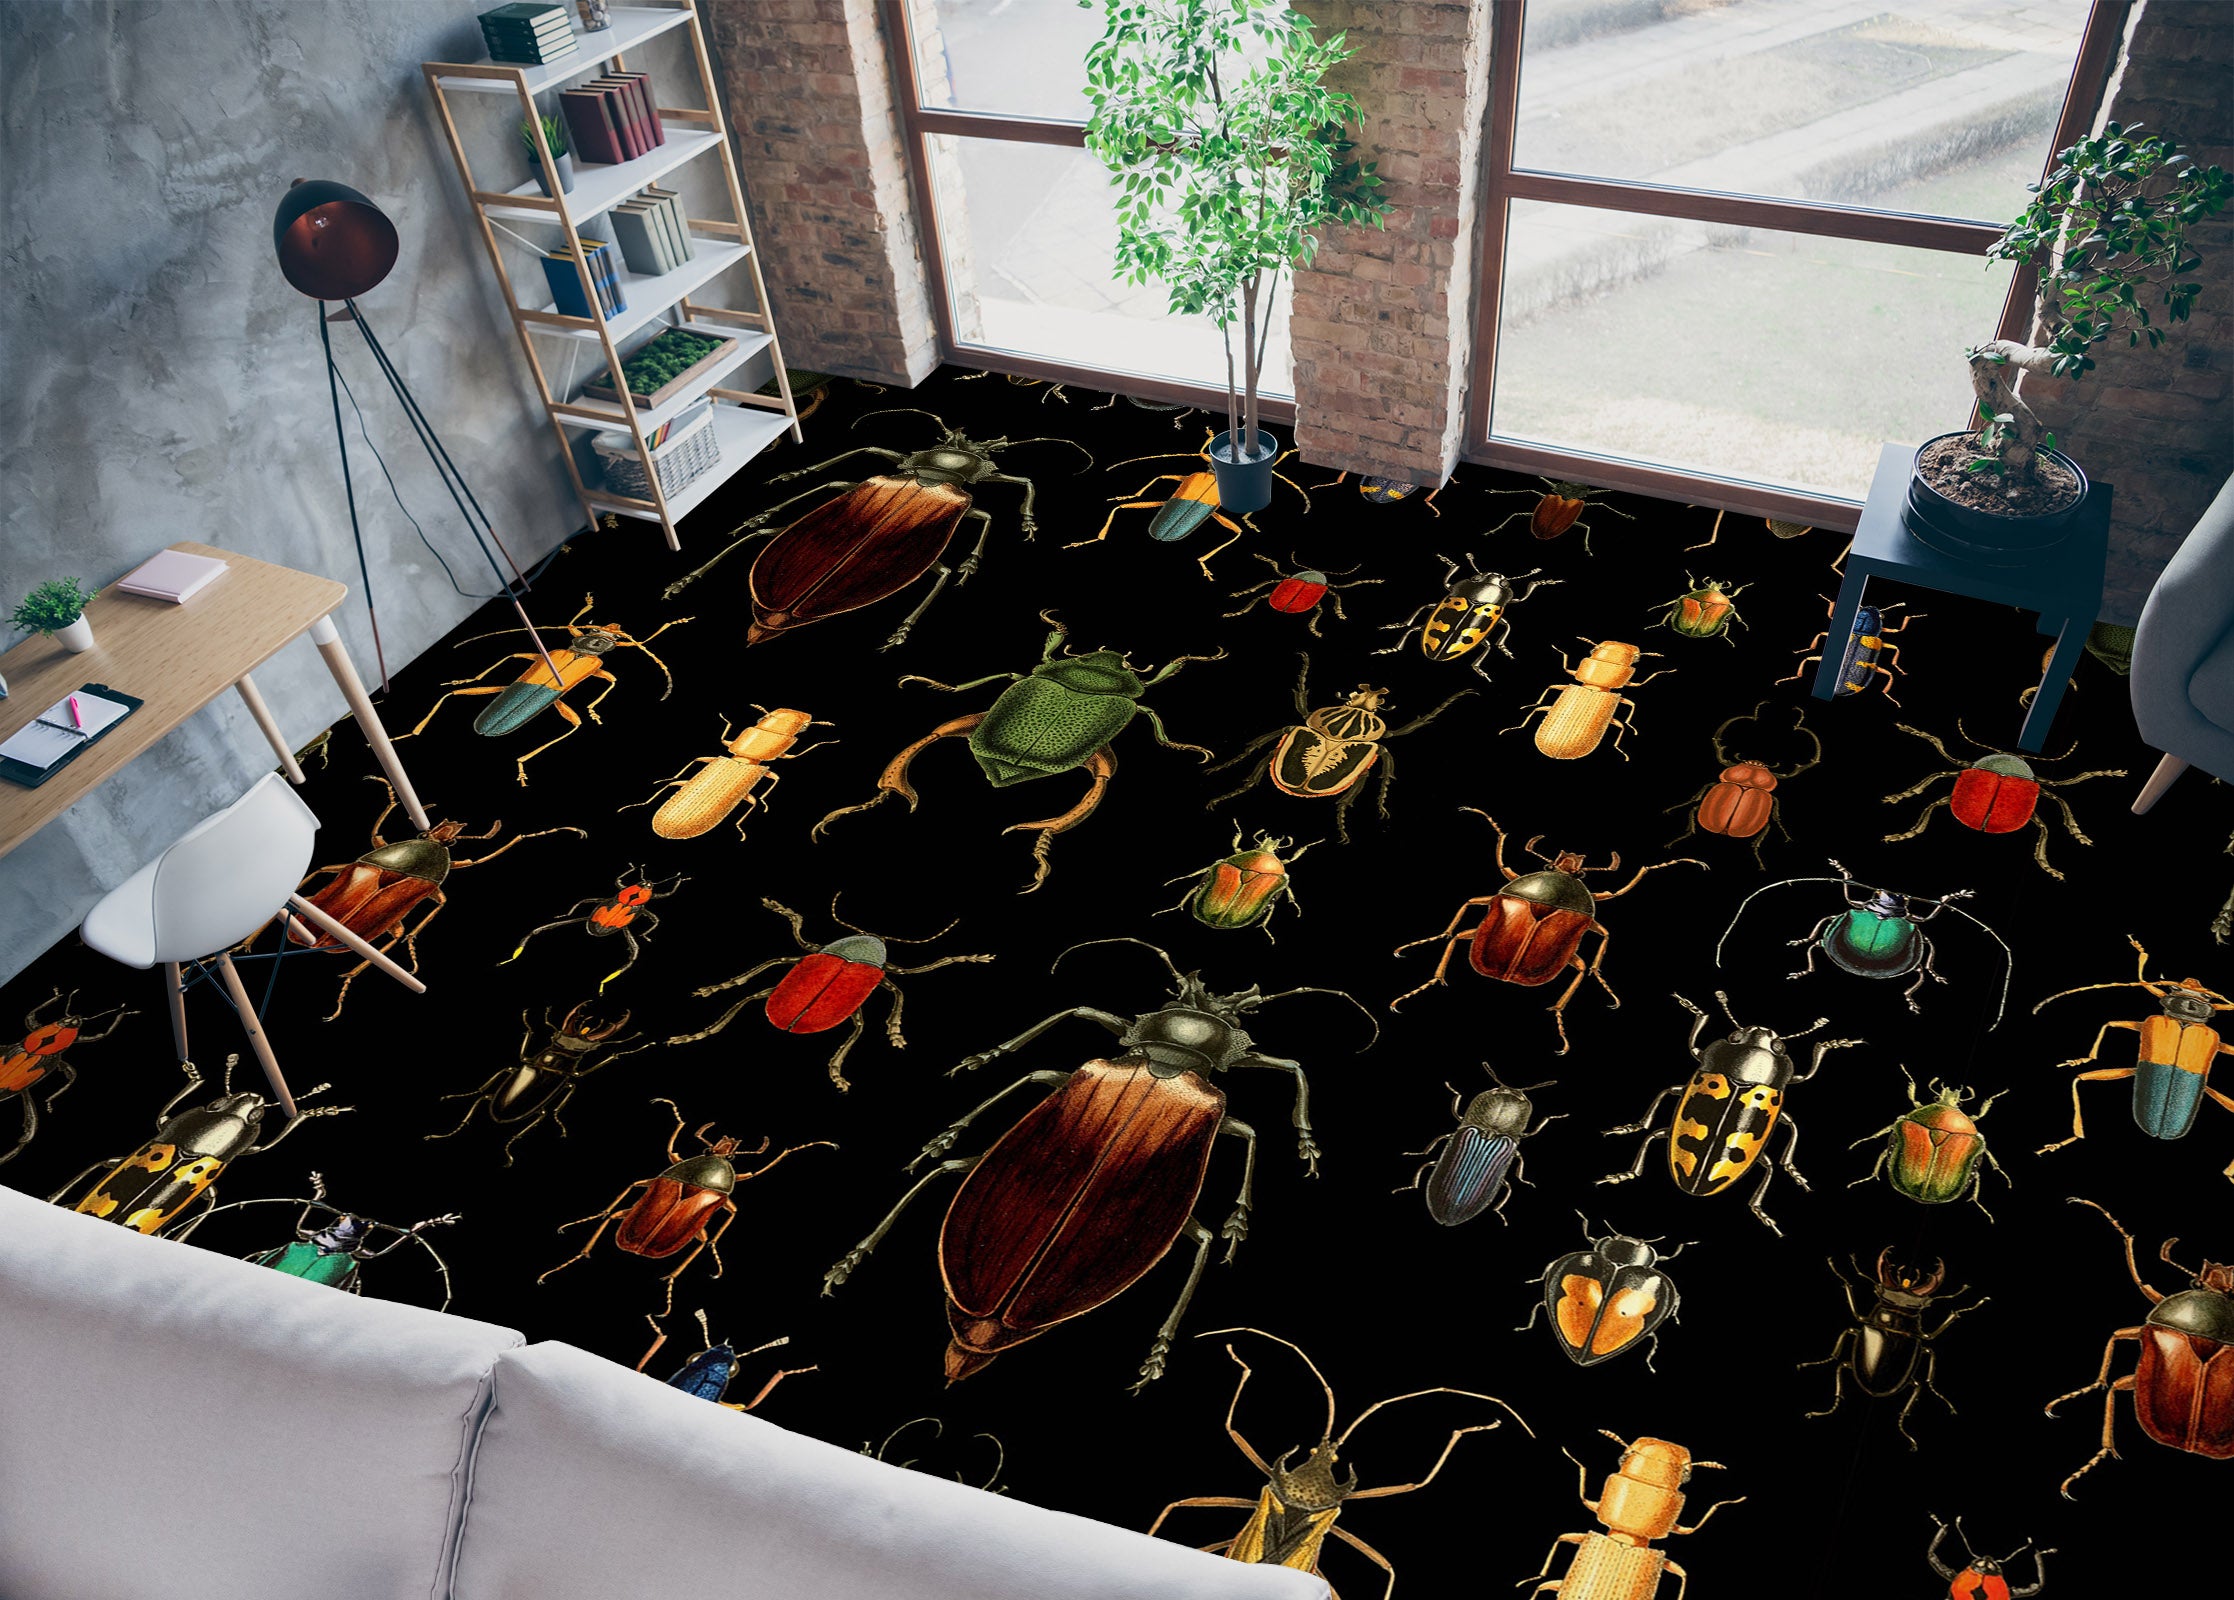 3D Insect 99196 Uta Naumann Floor Mural  Wallpaper Murals Self-Adhesive Removable Print Epoxy